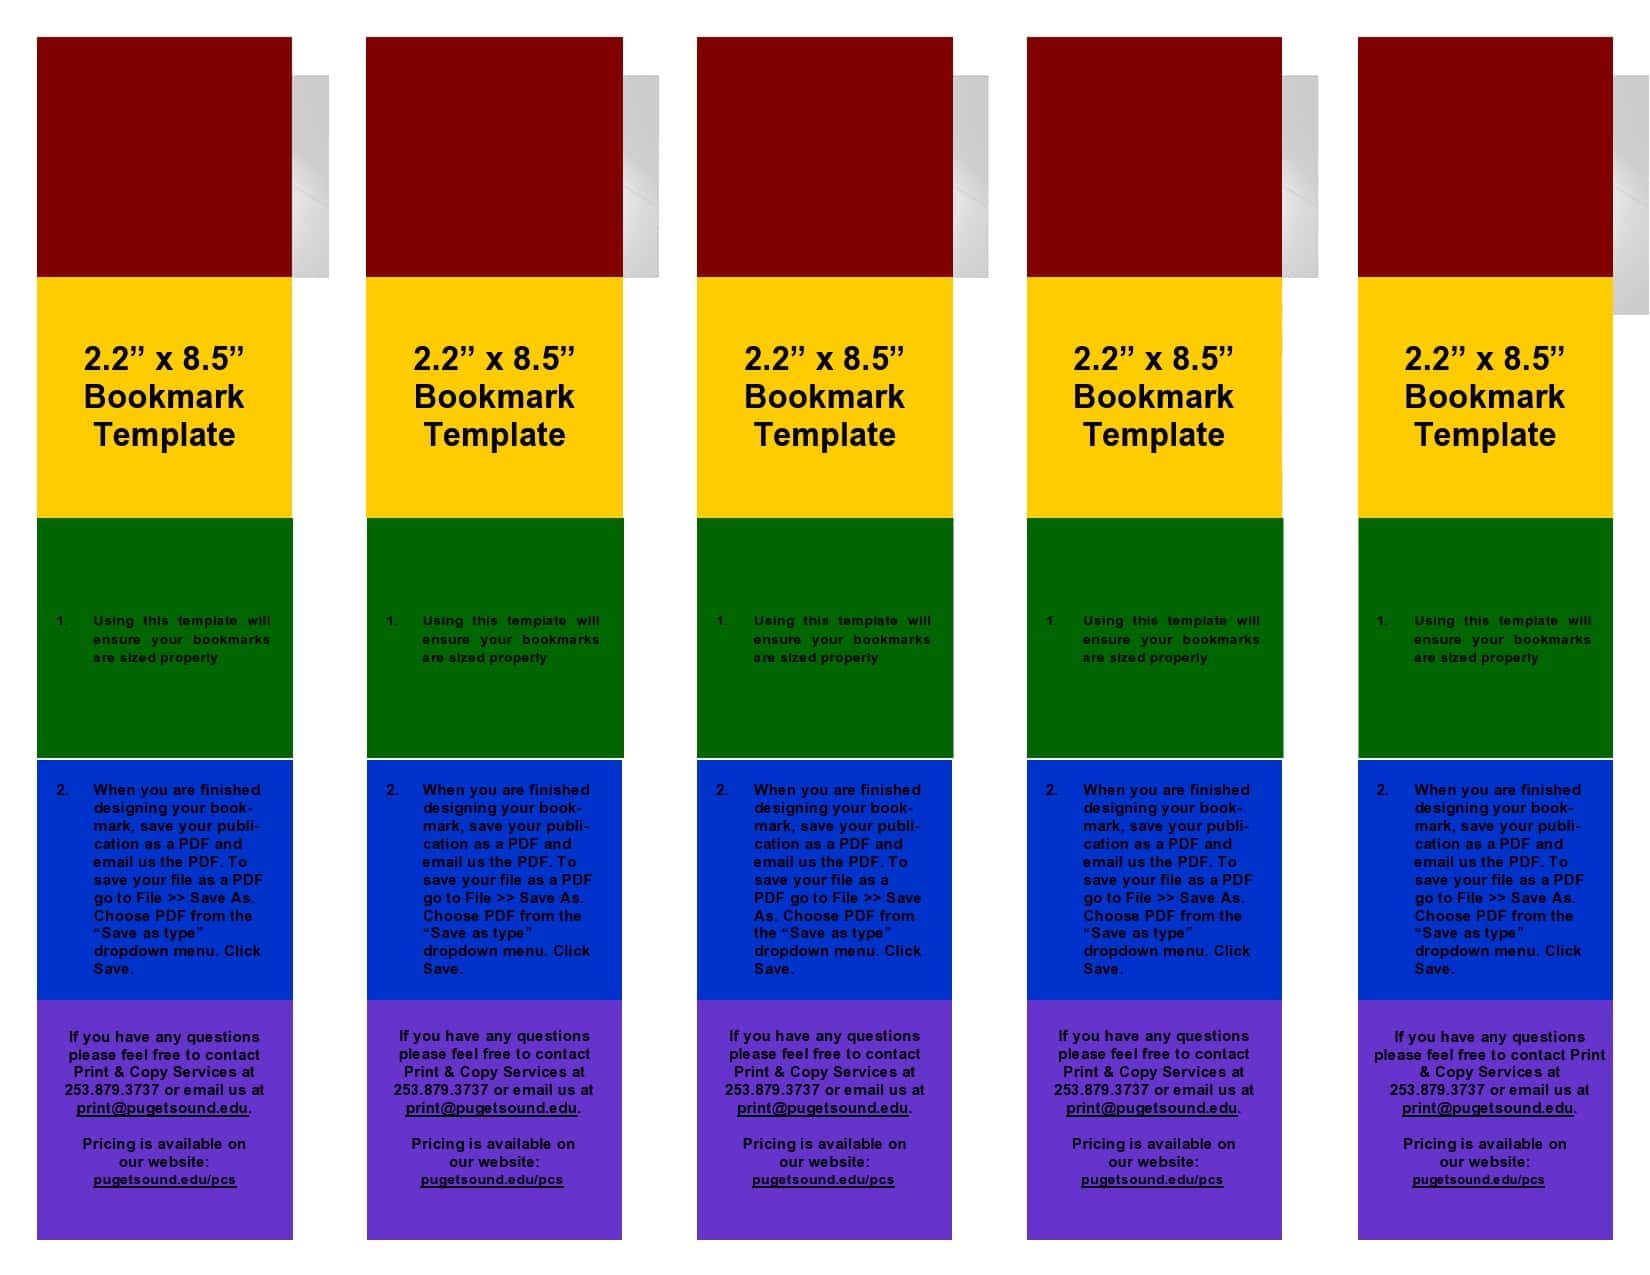 20 Free Bookmark Templates (Word, PDF) - TemplateArchive With Free Blank Bookmark Templates To Print